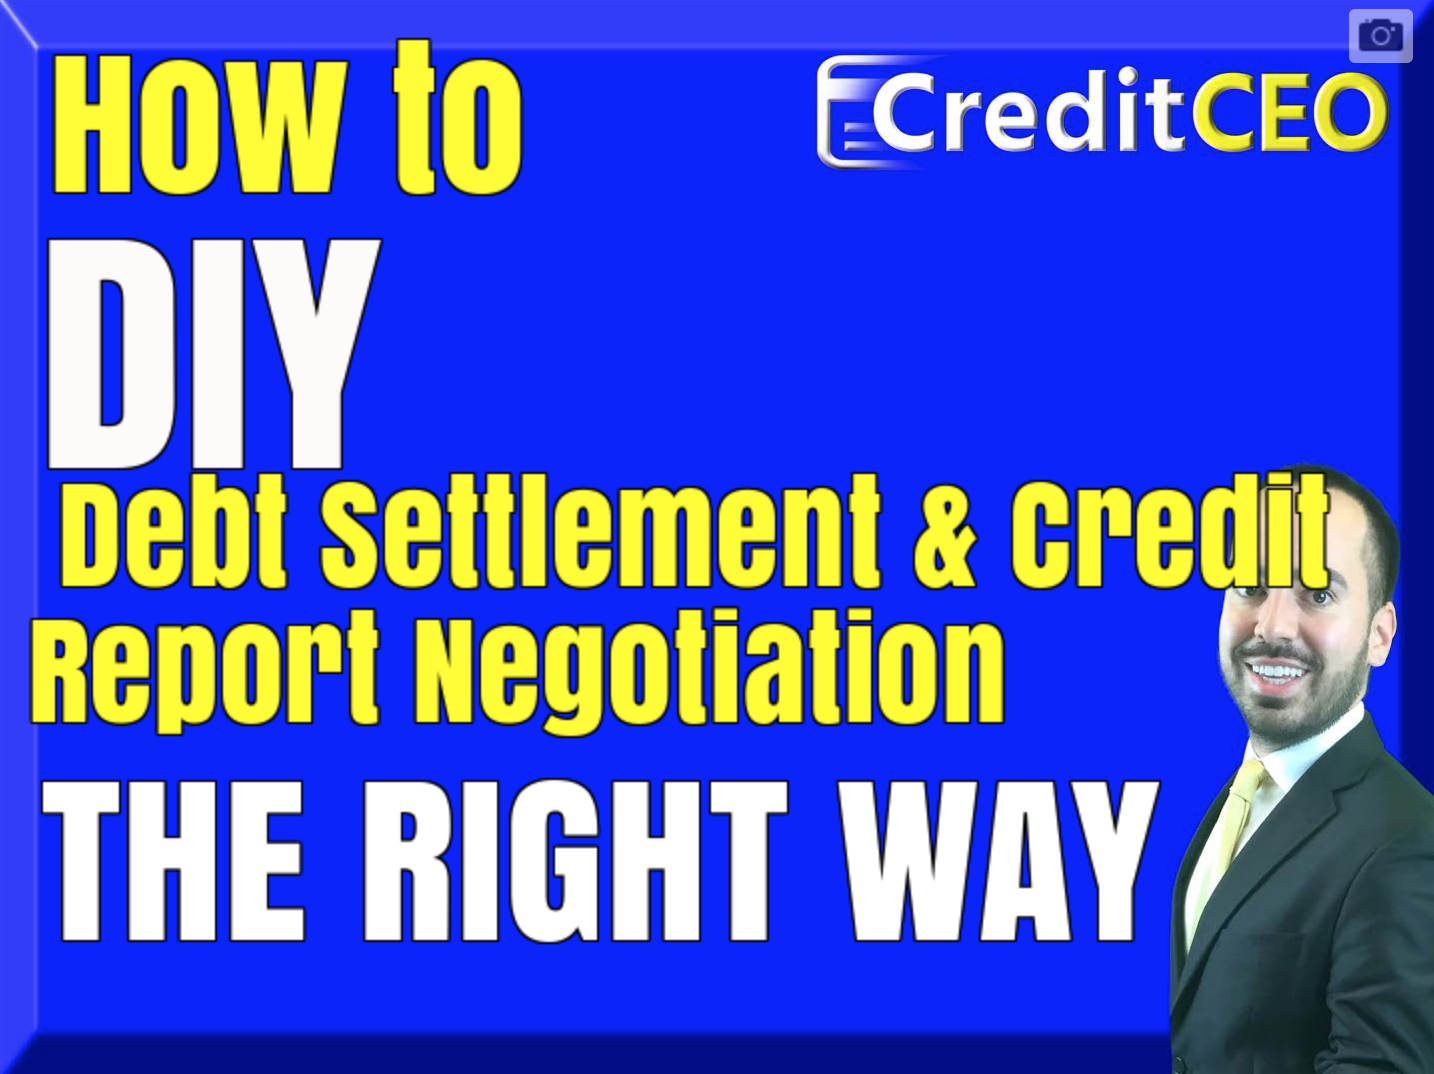 Debt Settlement & Credit Report Negotiation